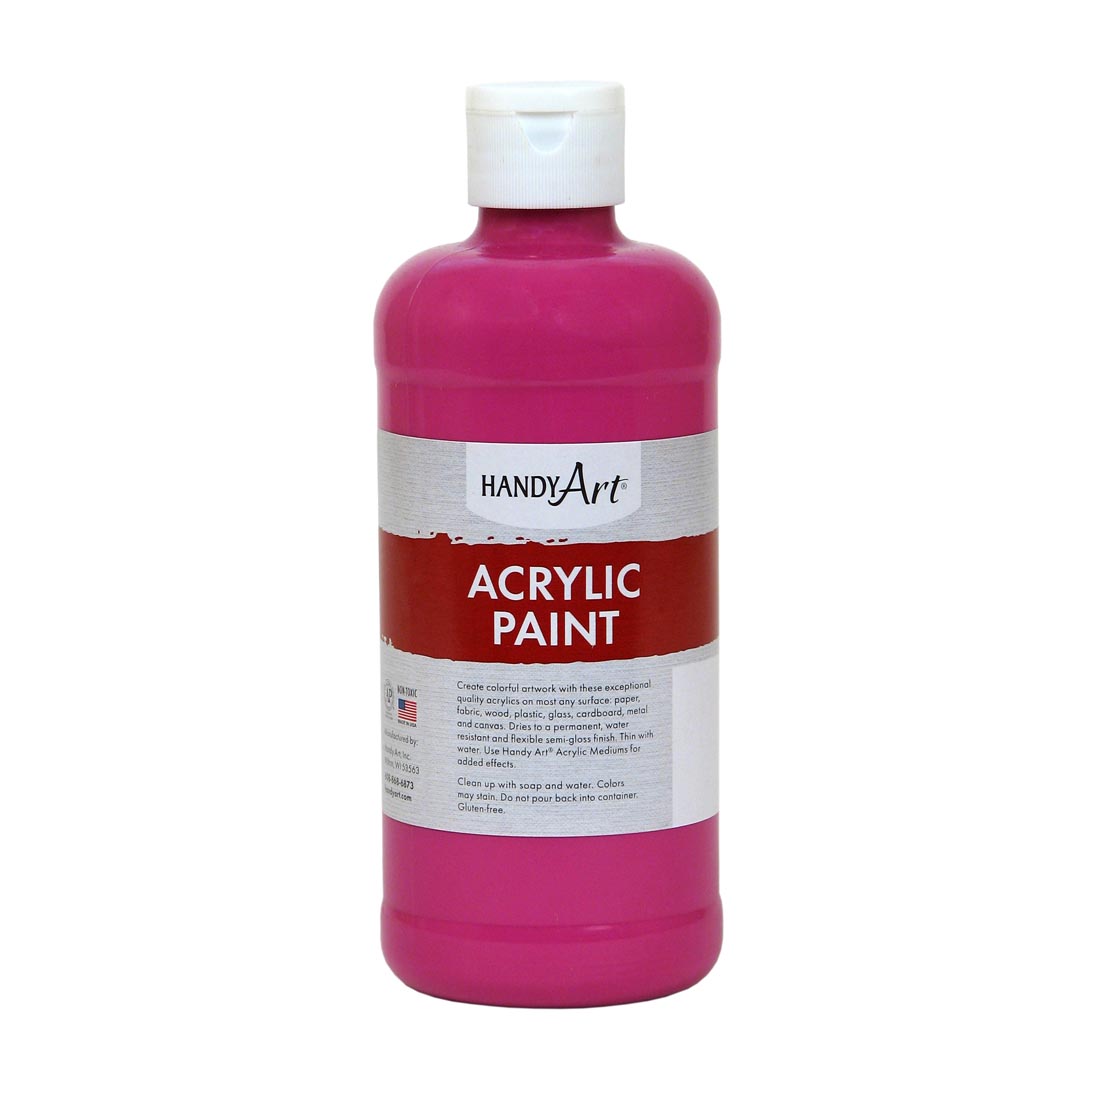 Pint Bottle of Magenta Handy Art Acrylic Paint